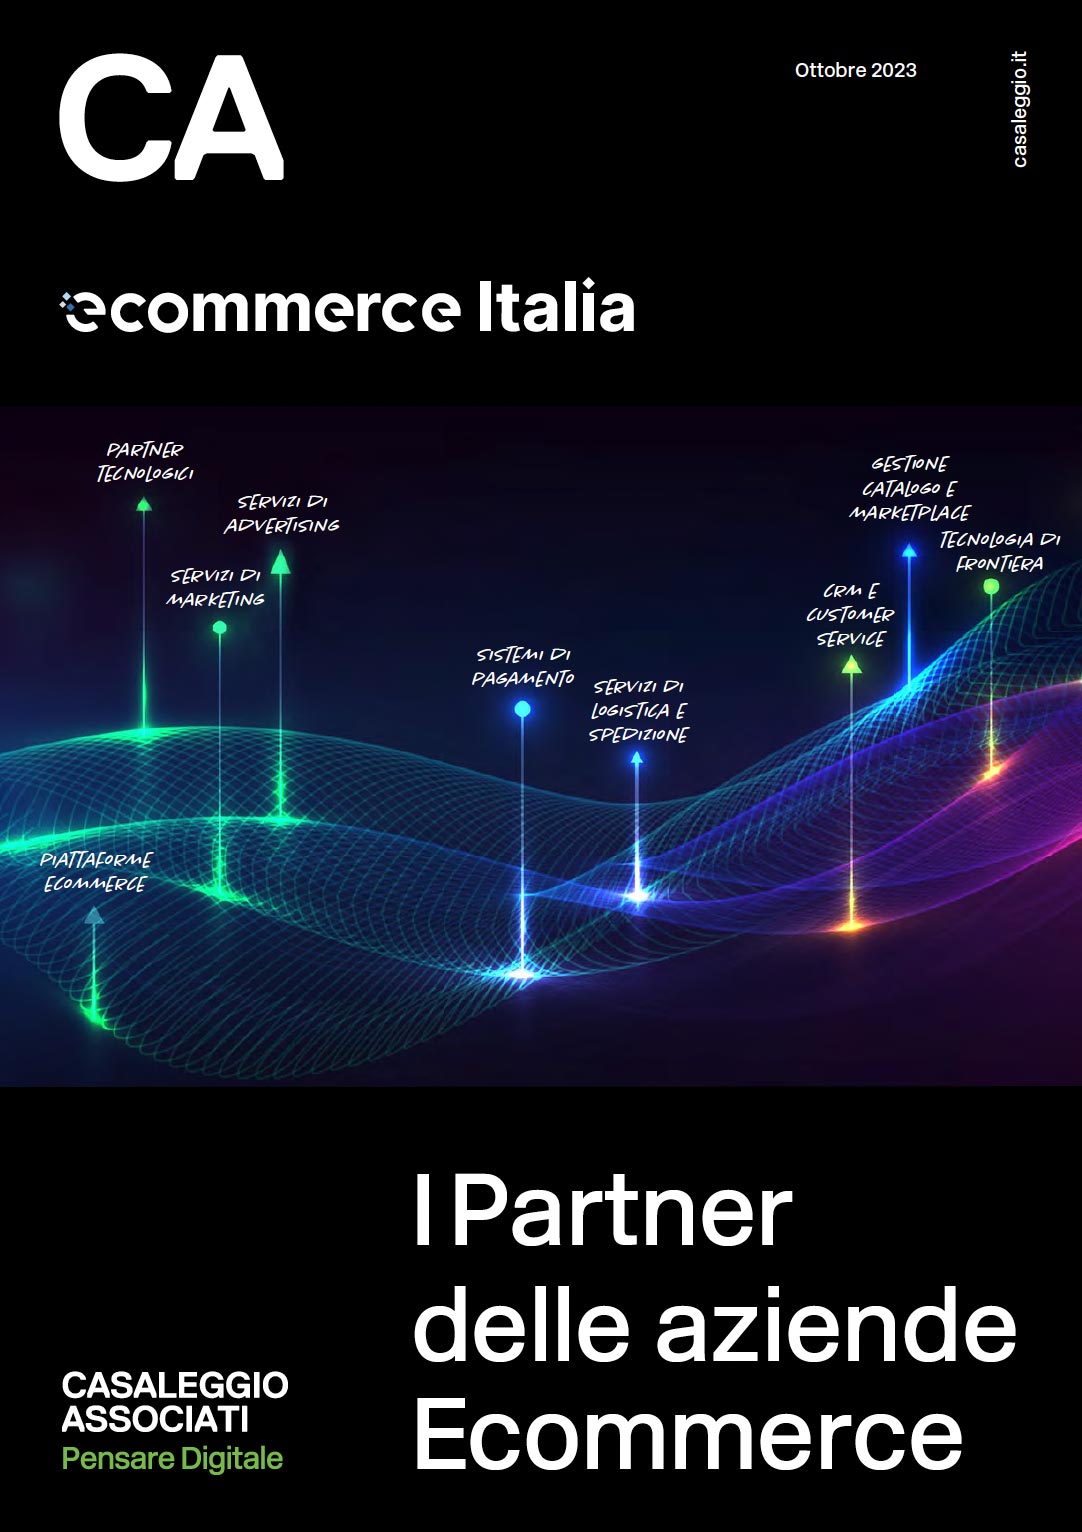 I partner delle aziende Ecommerce - Report